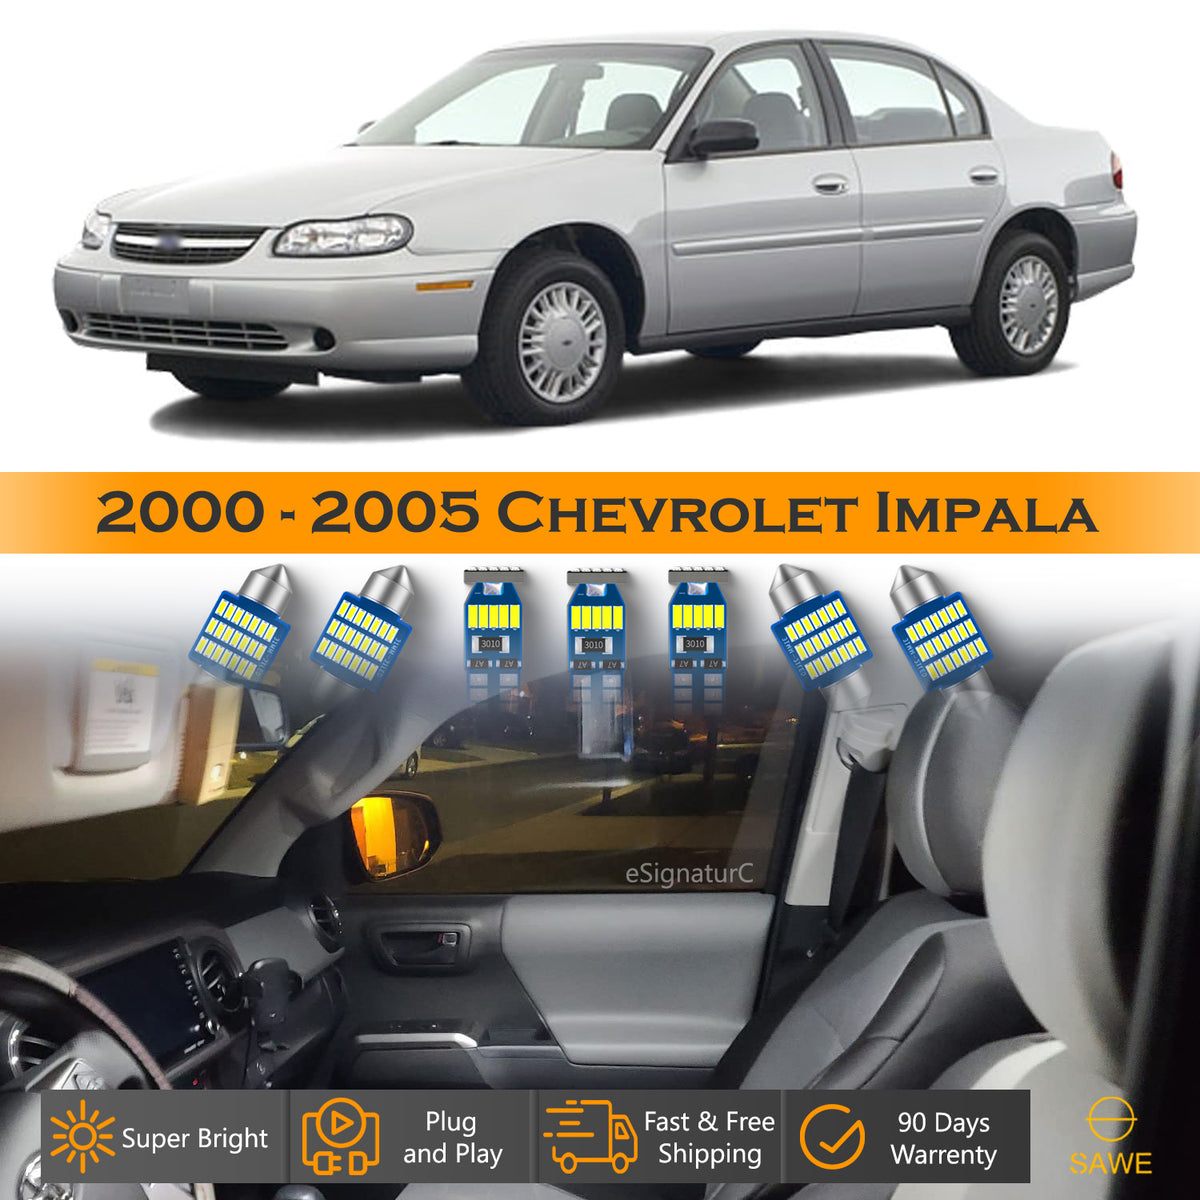 For Chevrolet Impala Interior LED Lights - Dome & Map Lights Package Kit for 2000 - 2005 - White